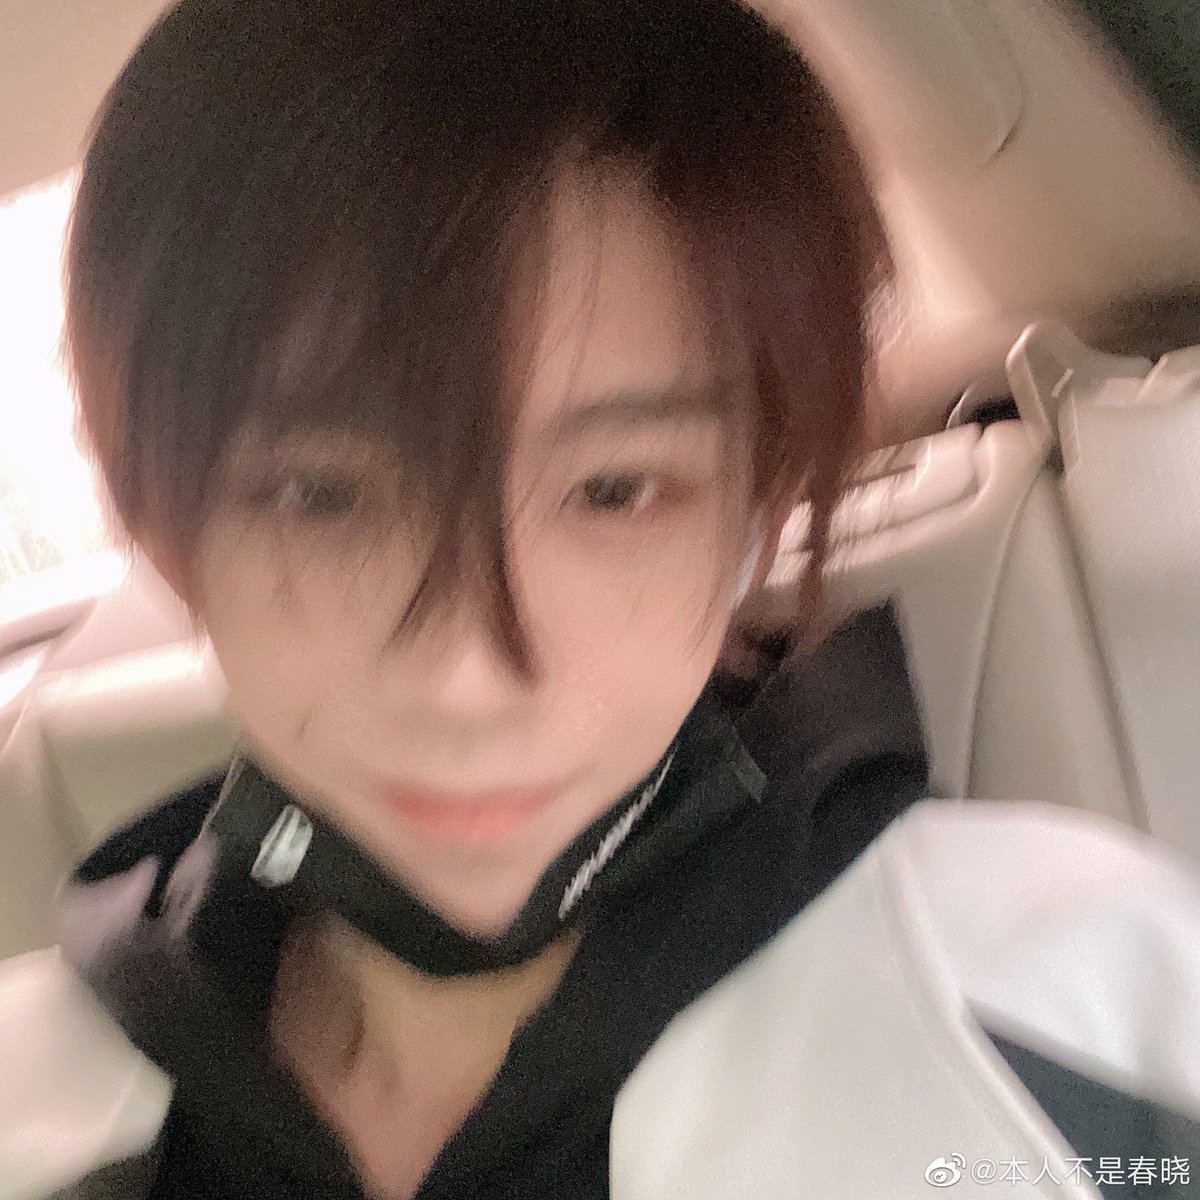 his weibo accounts are @青春有你3-张帅博 and @本人不是春晓